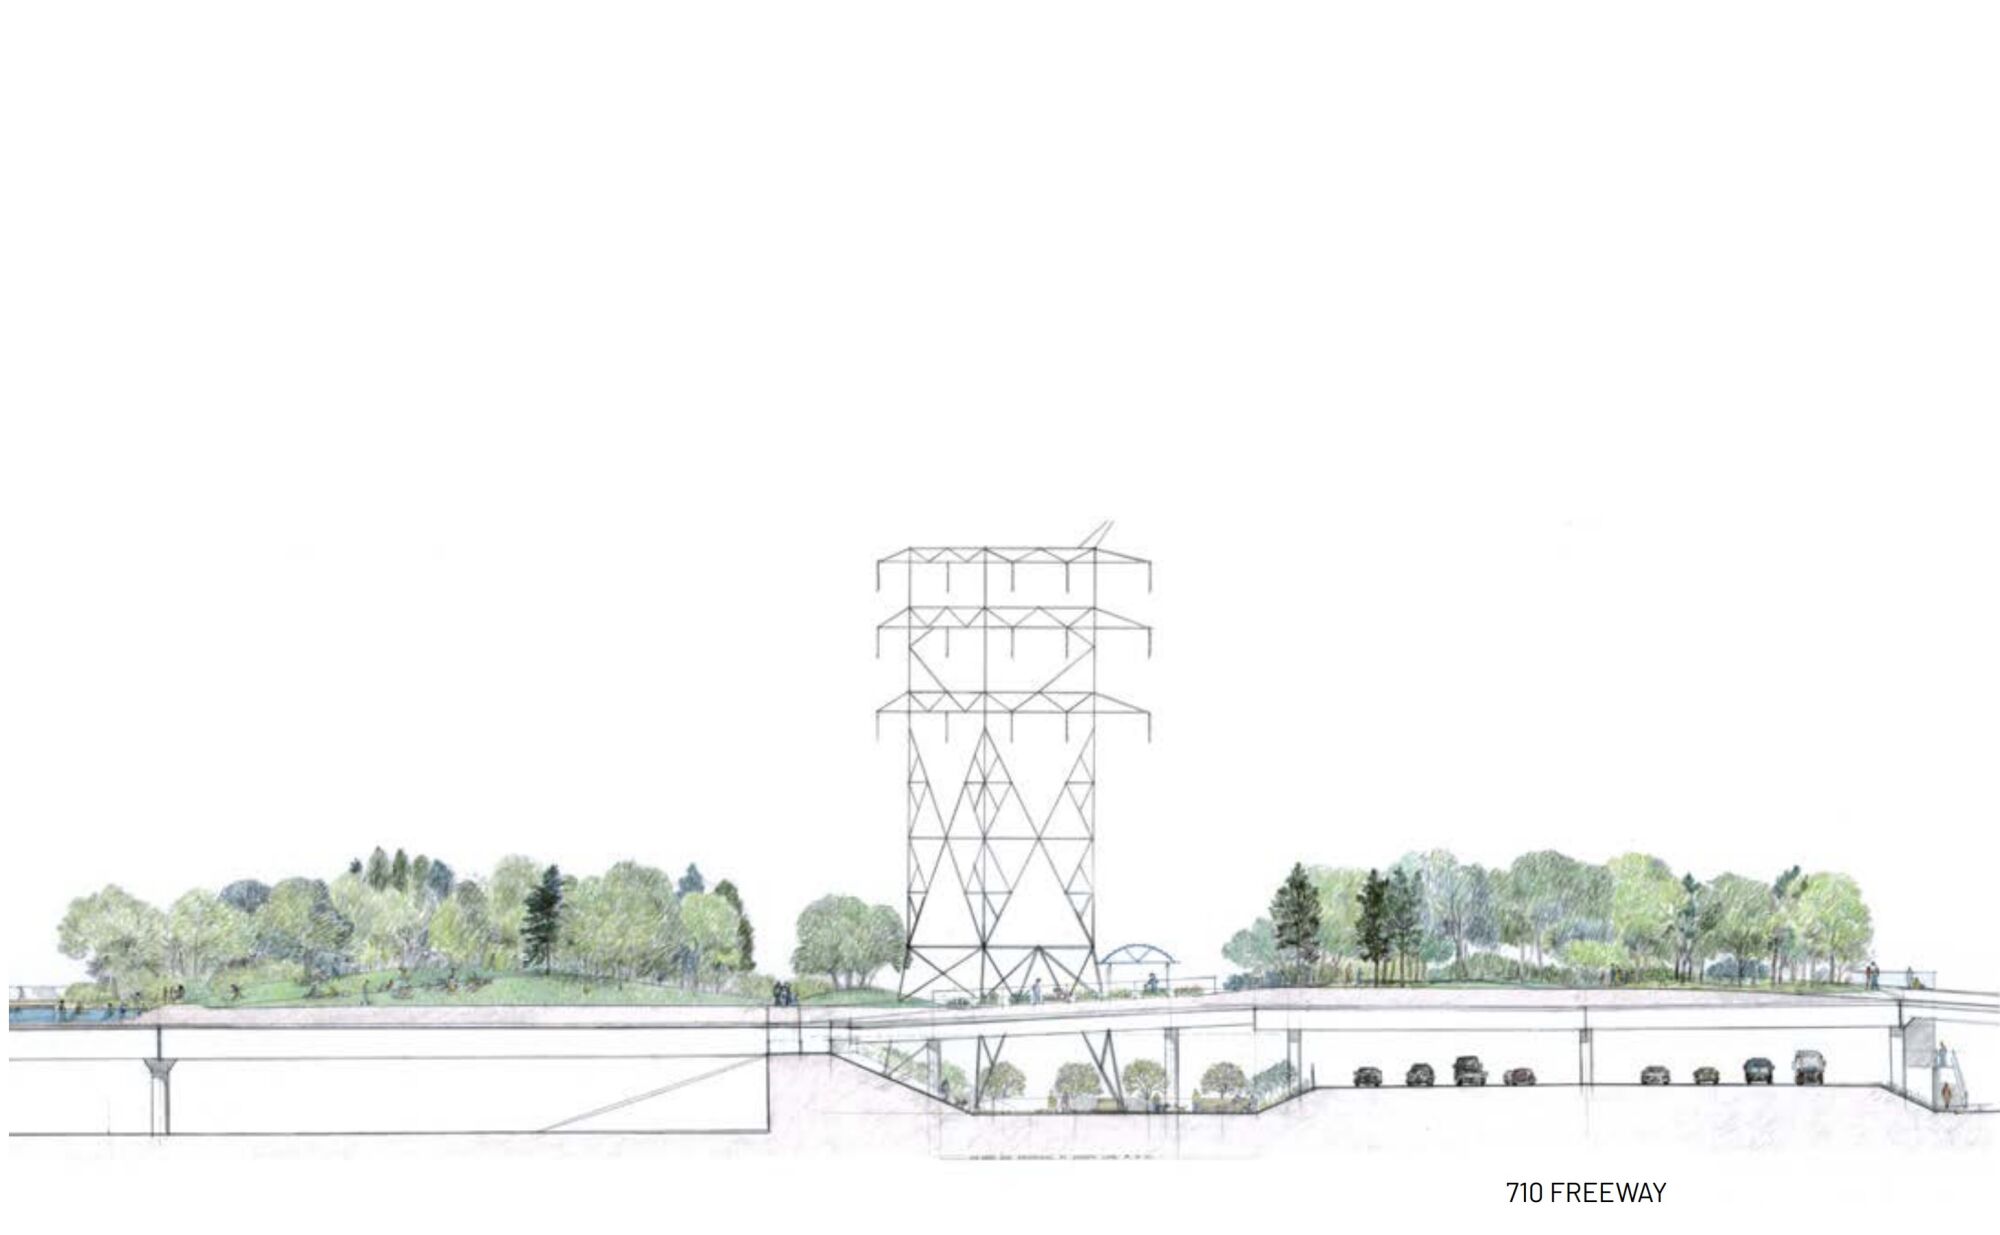 An artist's rendering of a proposed platform park alongside the 710 Freeway.